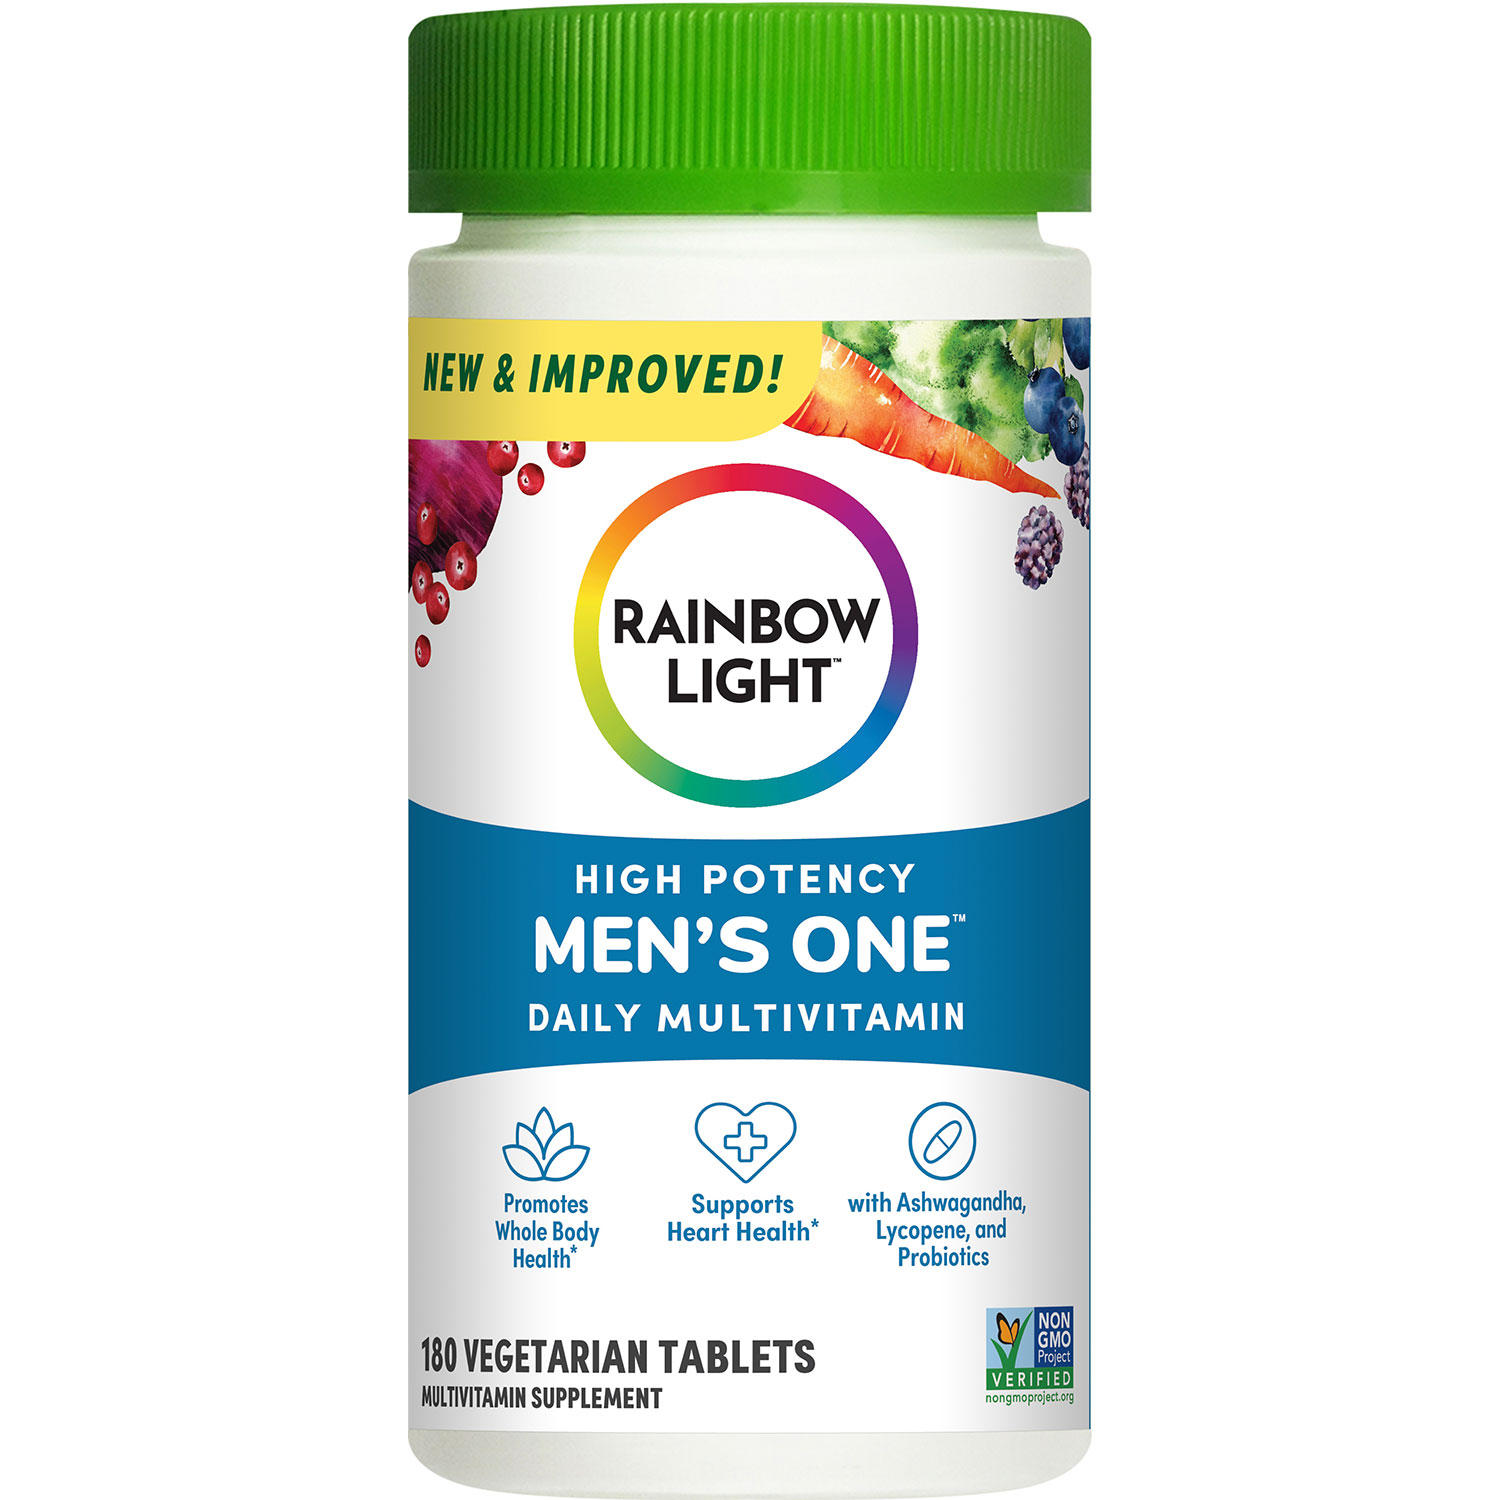 Rainbow Light Men’s One Non-GMO Project Verified Multivitamin Plus Superfoods & Probiotics (180 ct.)